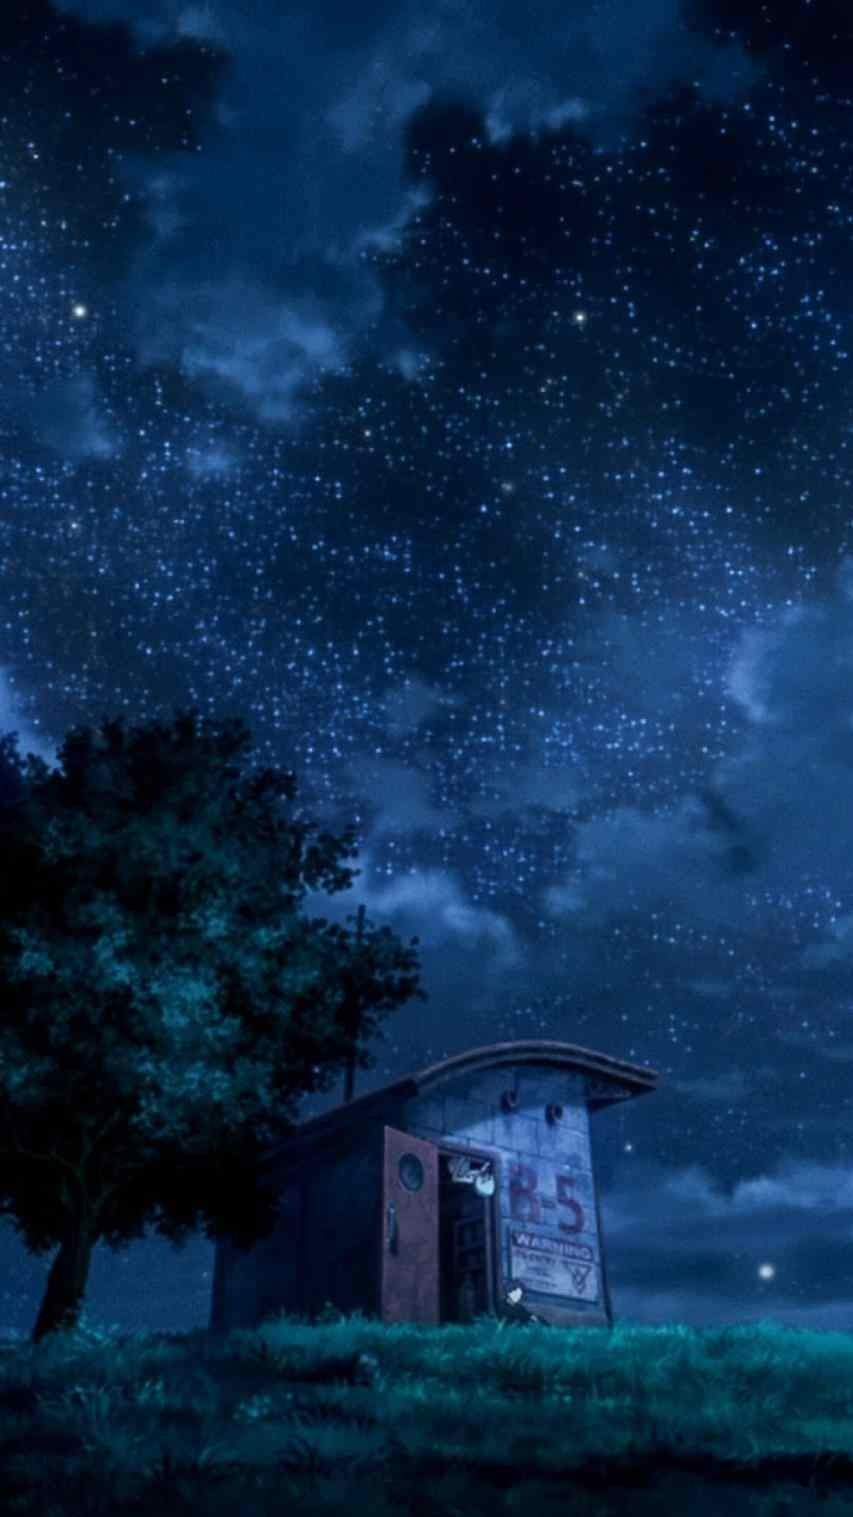 Dark Anime Scenery Wallpaper Image. Anime scenery wallpaper